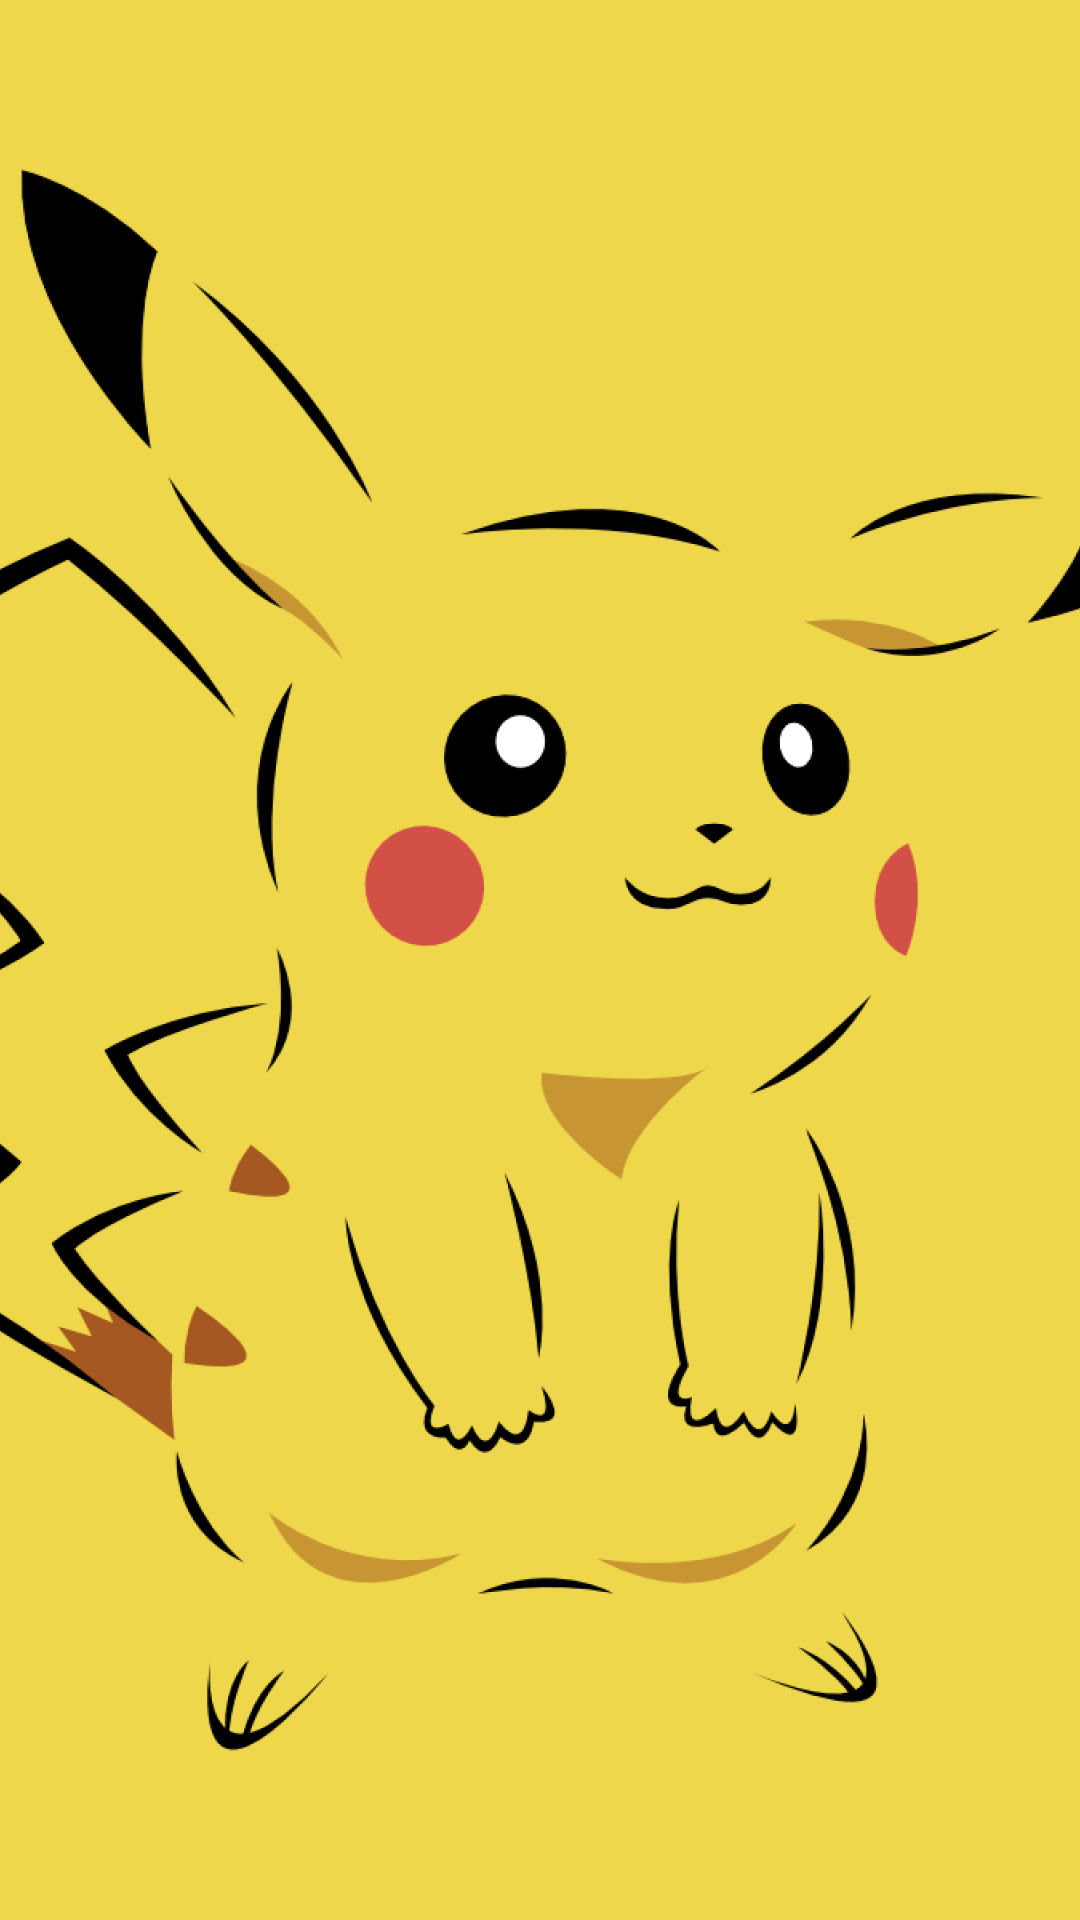 Detetive pikachu  Pikachu art Pikachu drawing Pikachu wallpaper